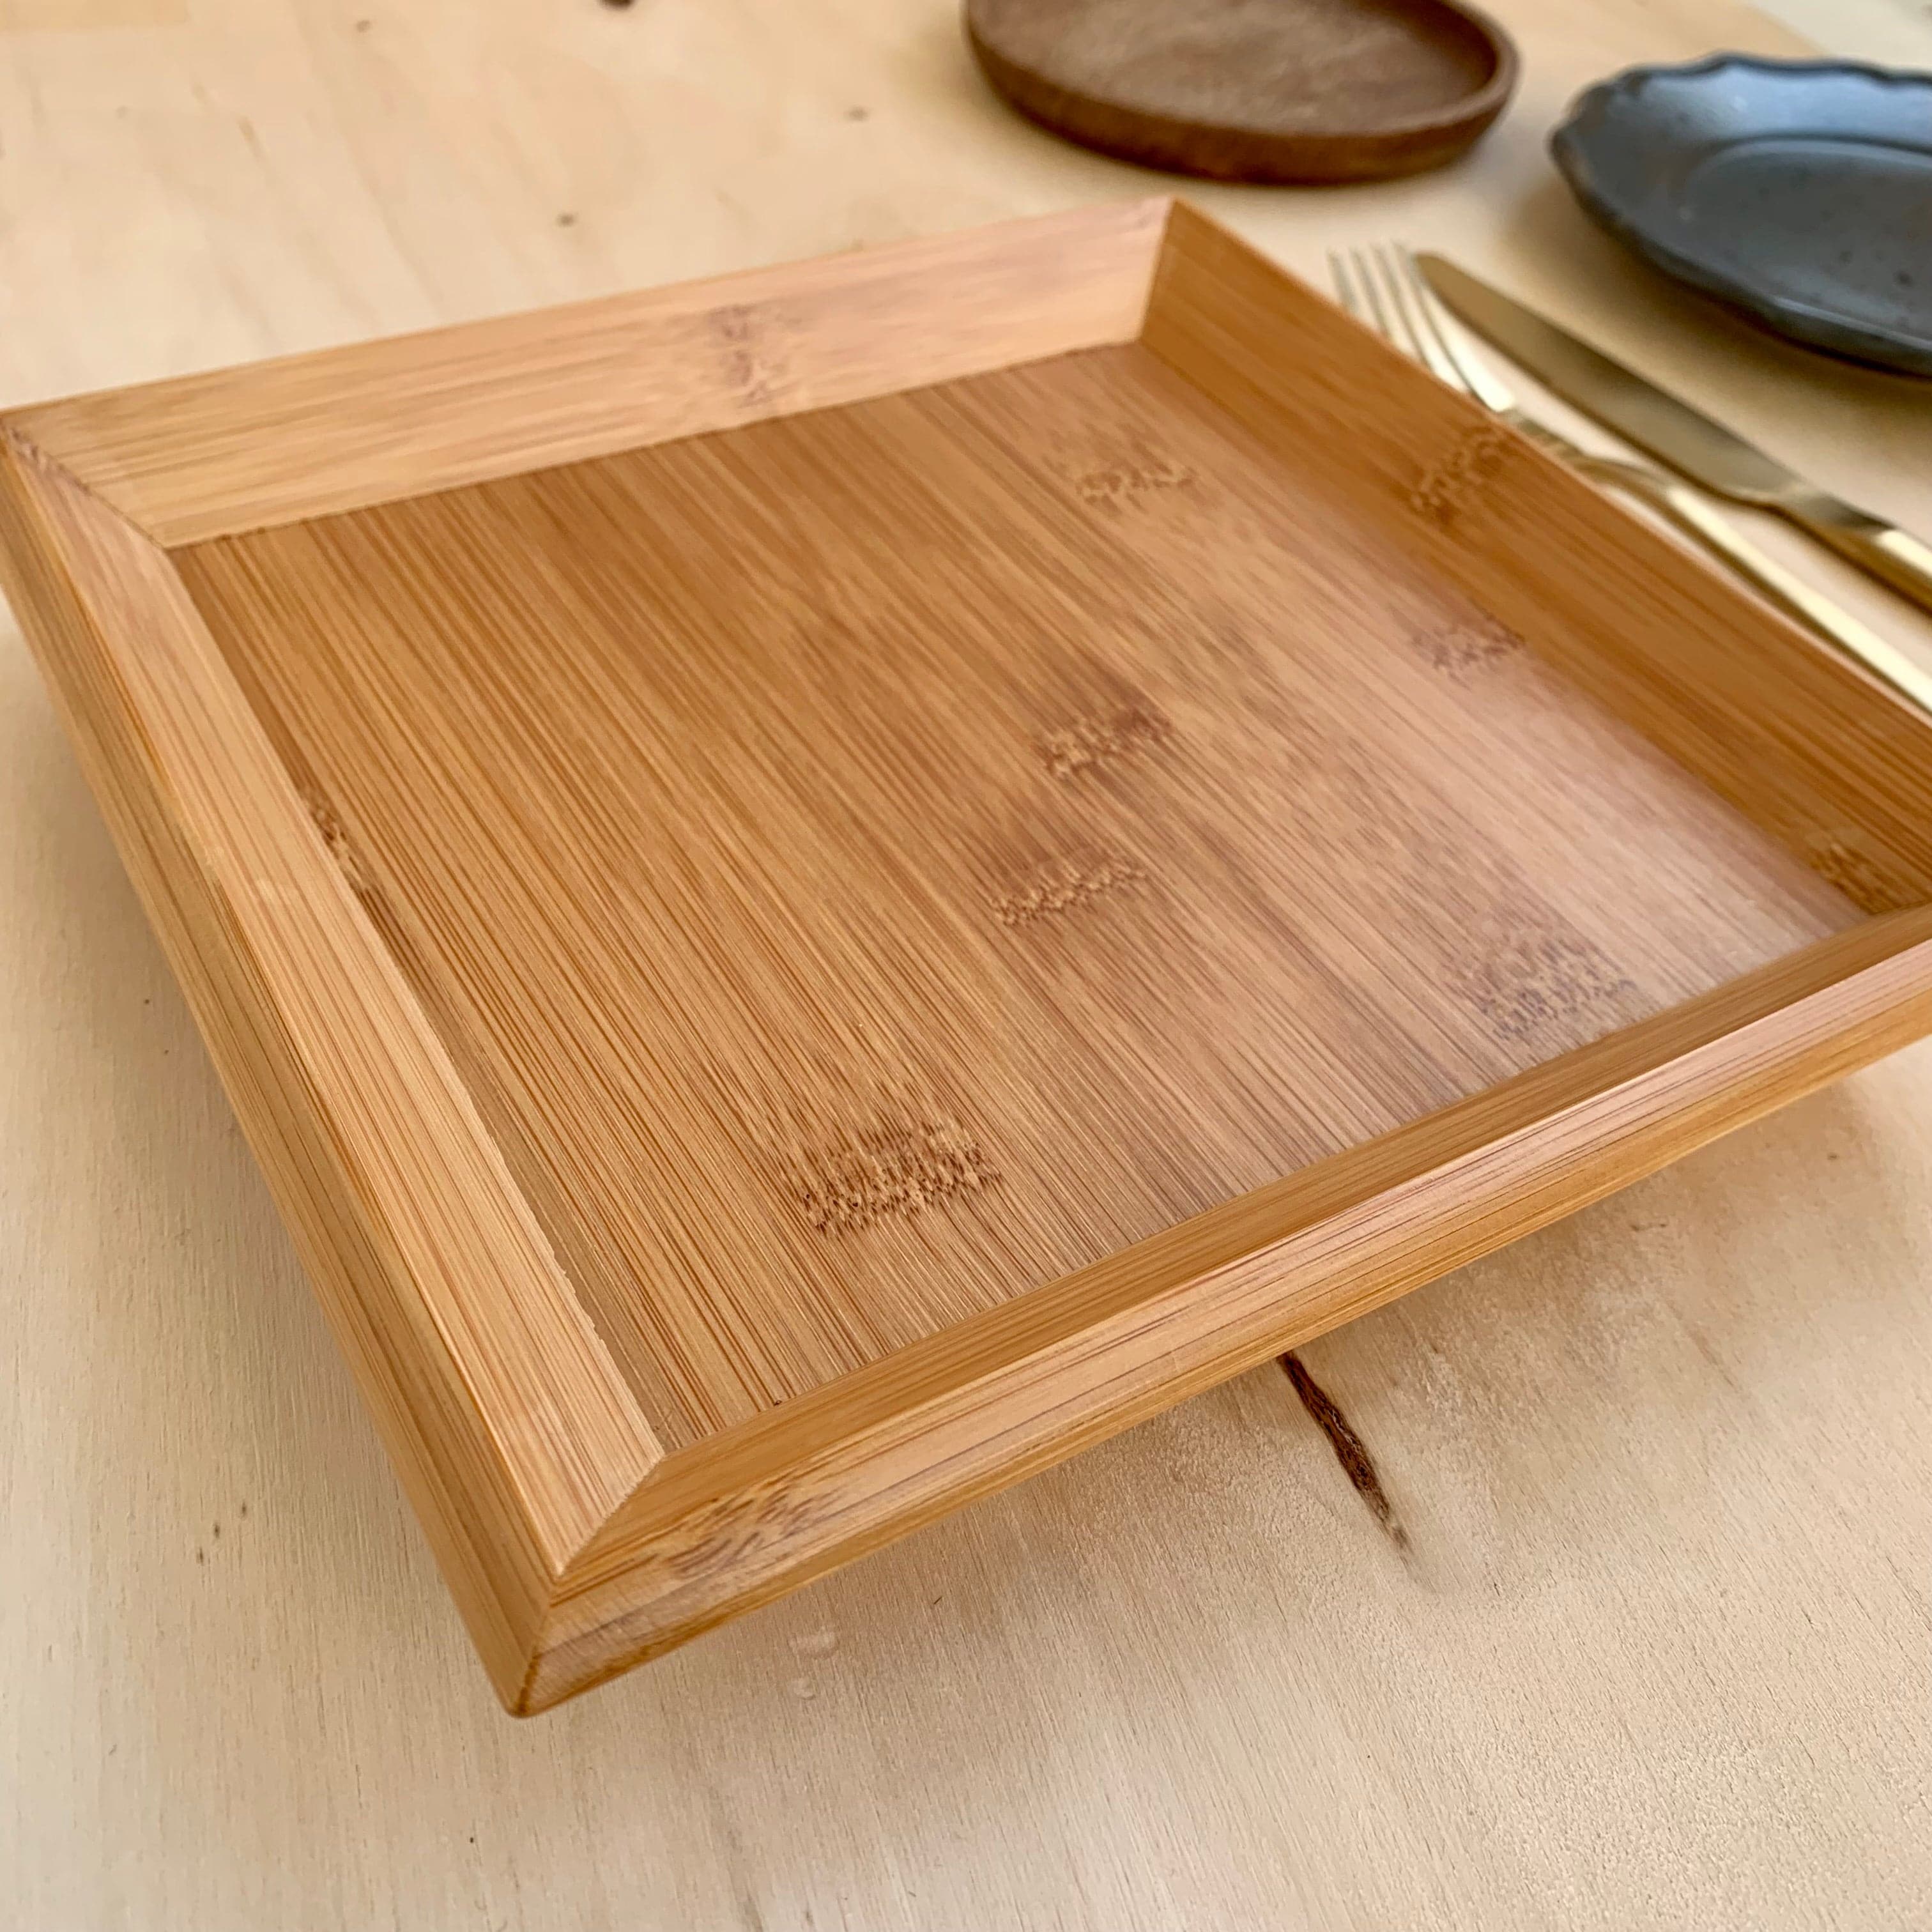 Handmade Square Bamboo Tray For Sushi